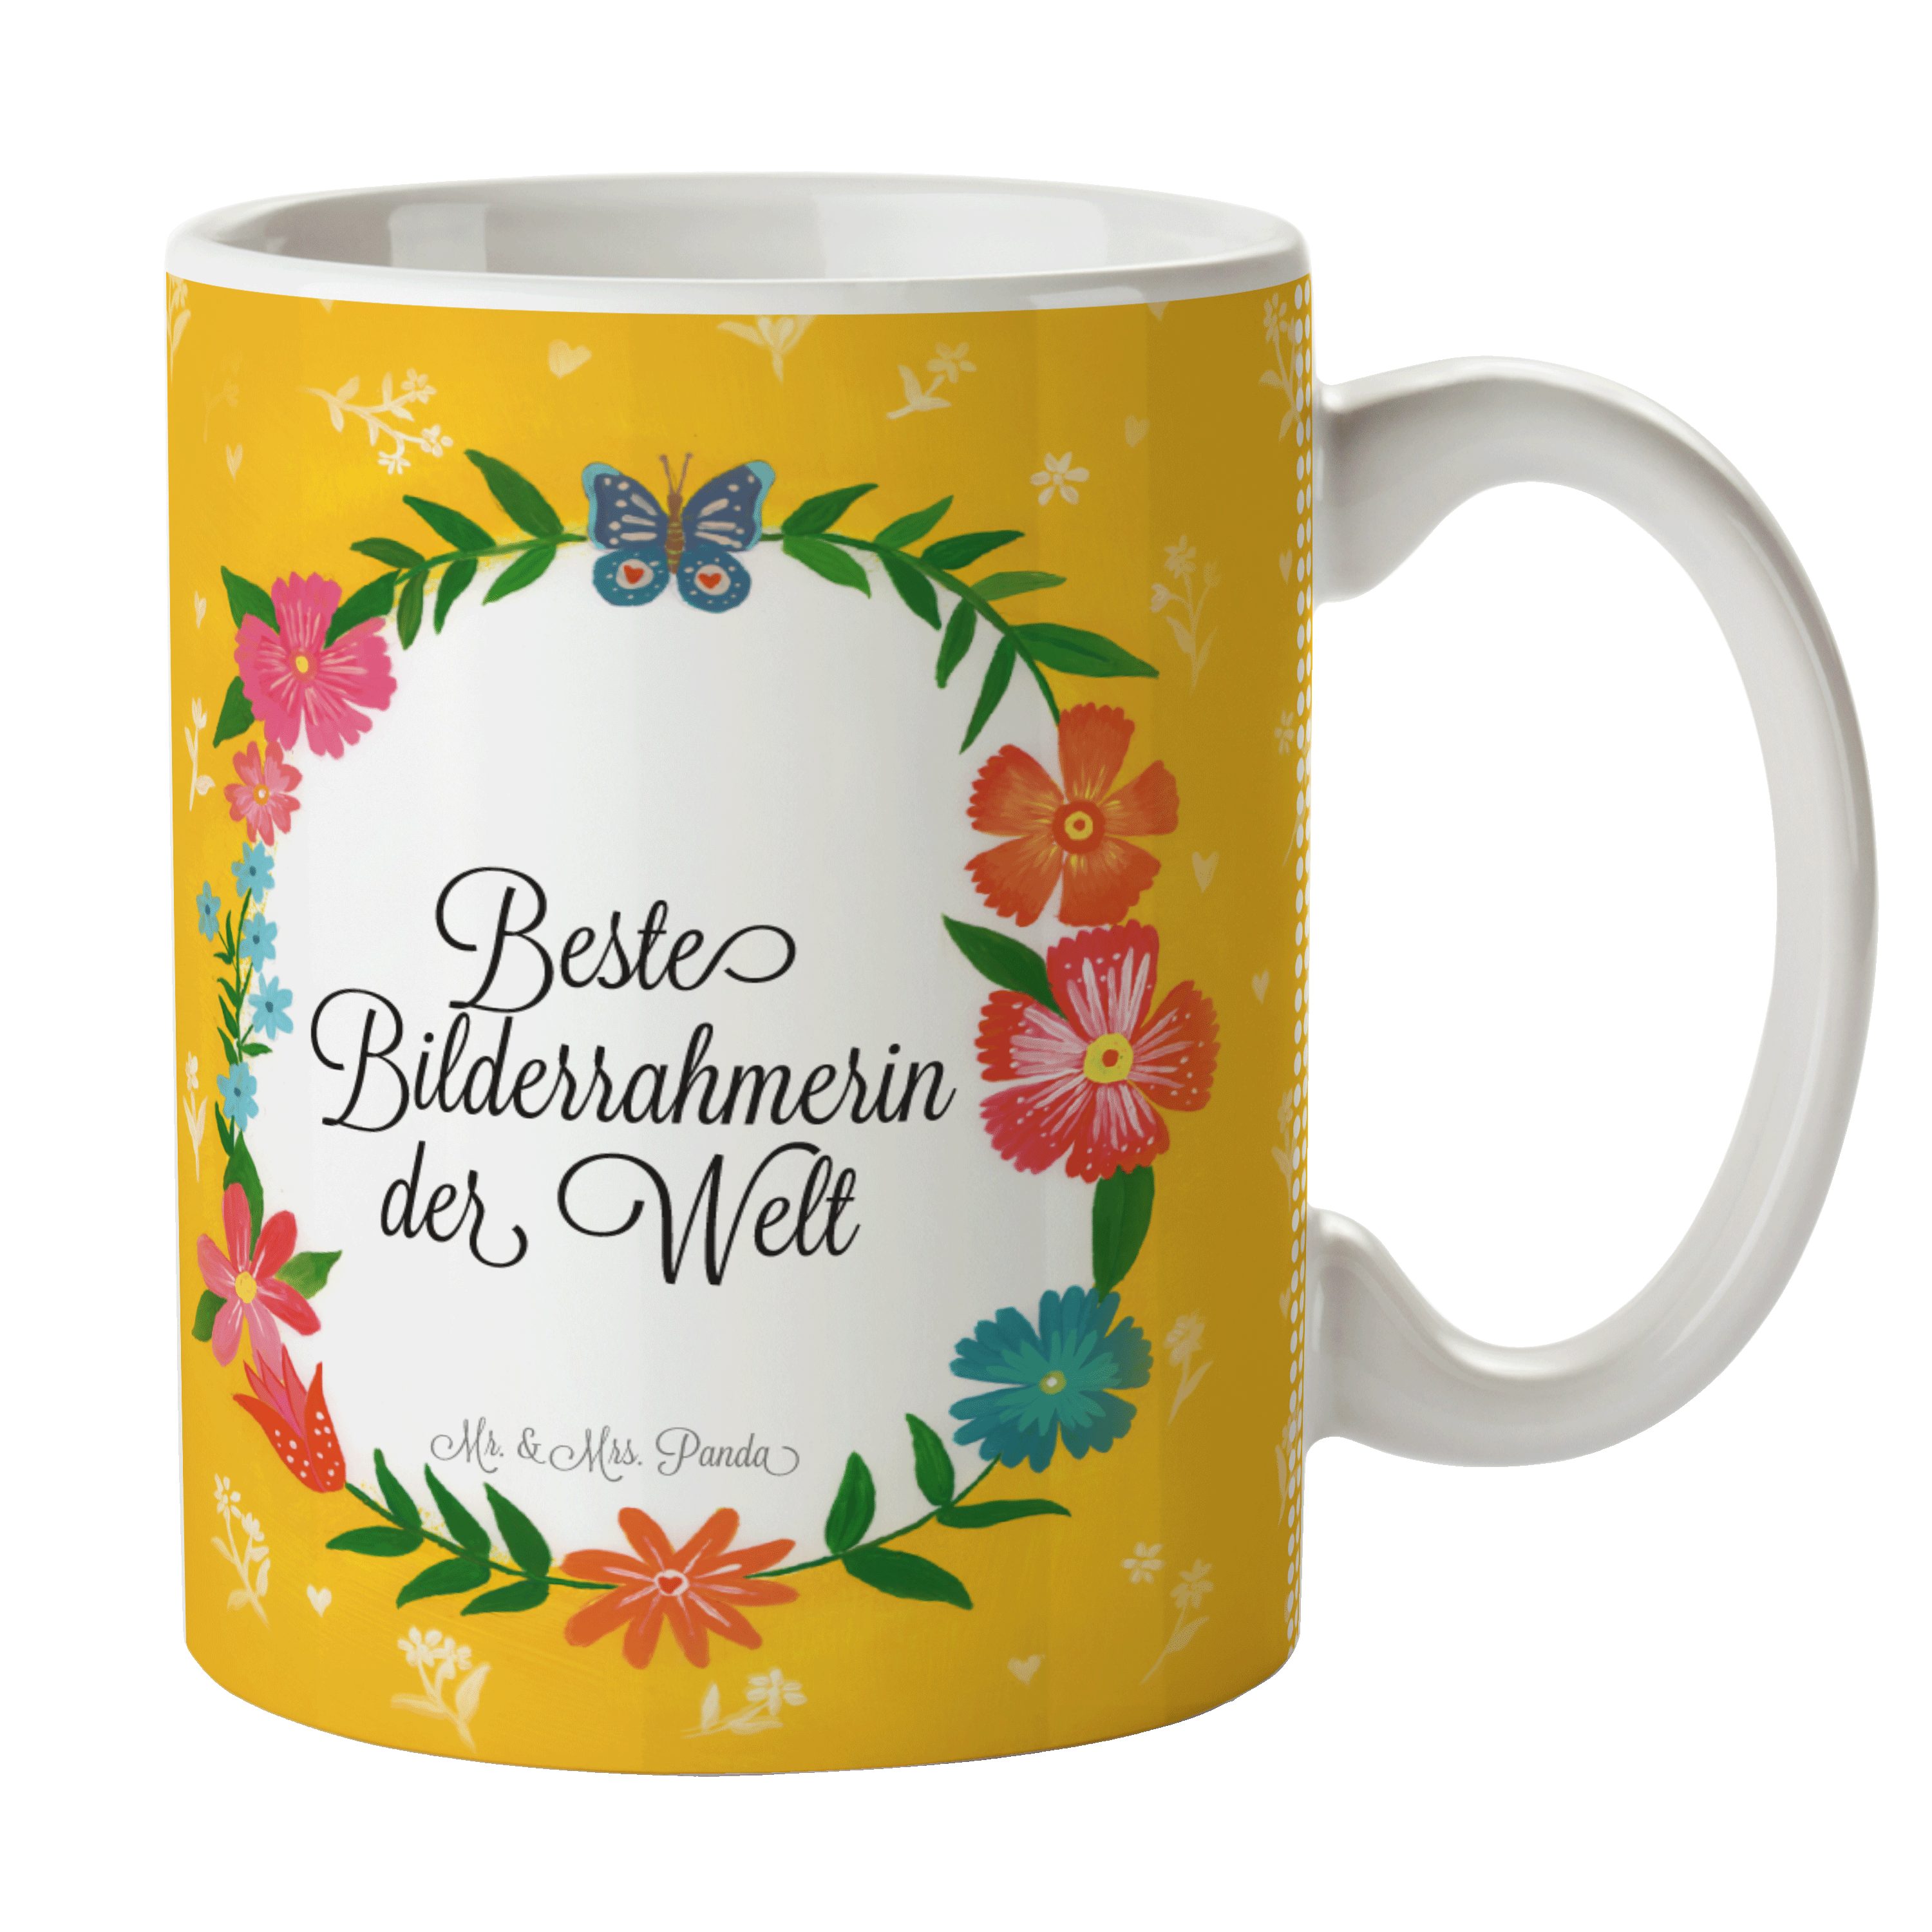 Mr. & Mrs. Panda Tasse Bilderrahmerin - Geschenk, Gratulation, Geschenk Tasse, Kaffeebecher, Keramik